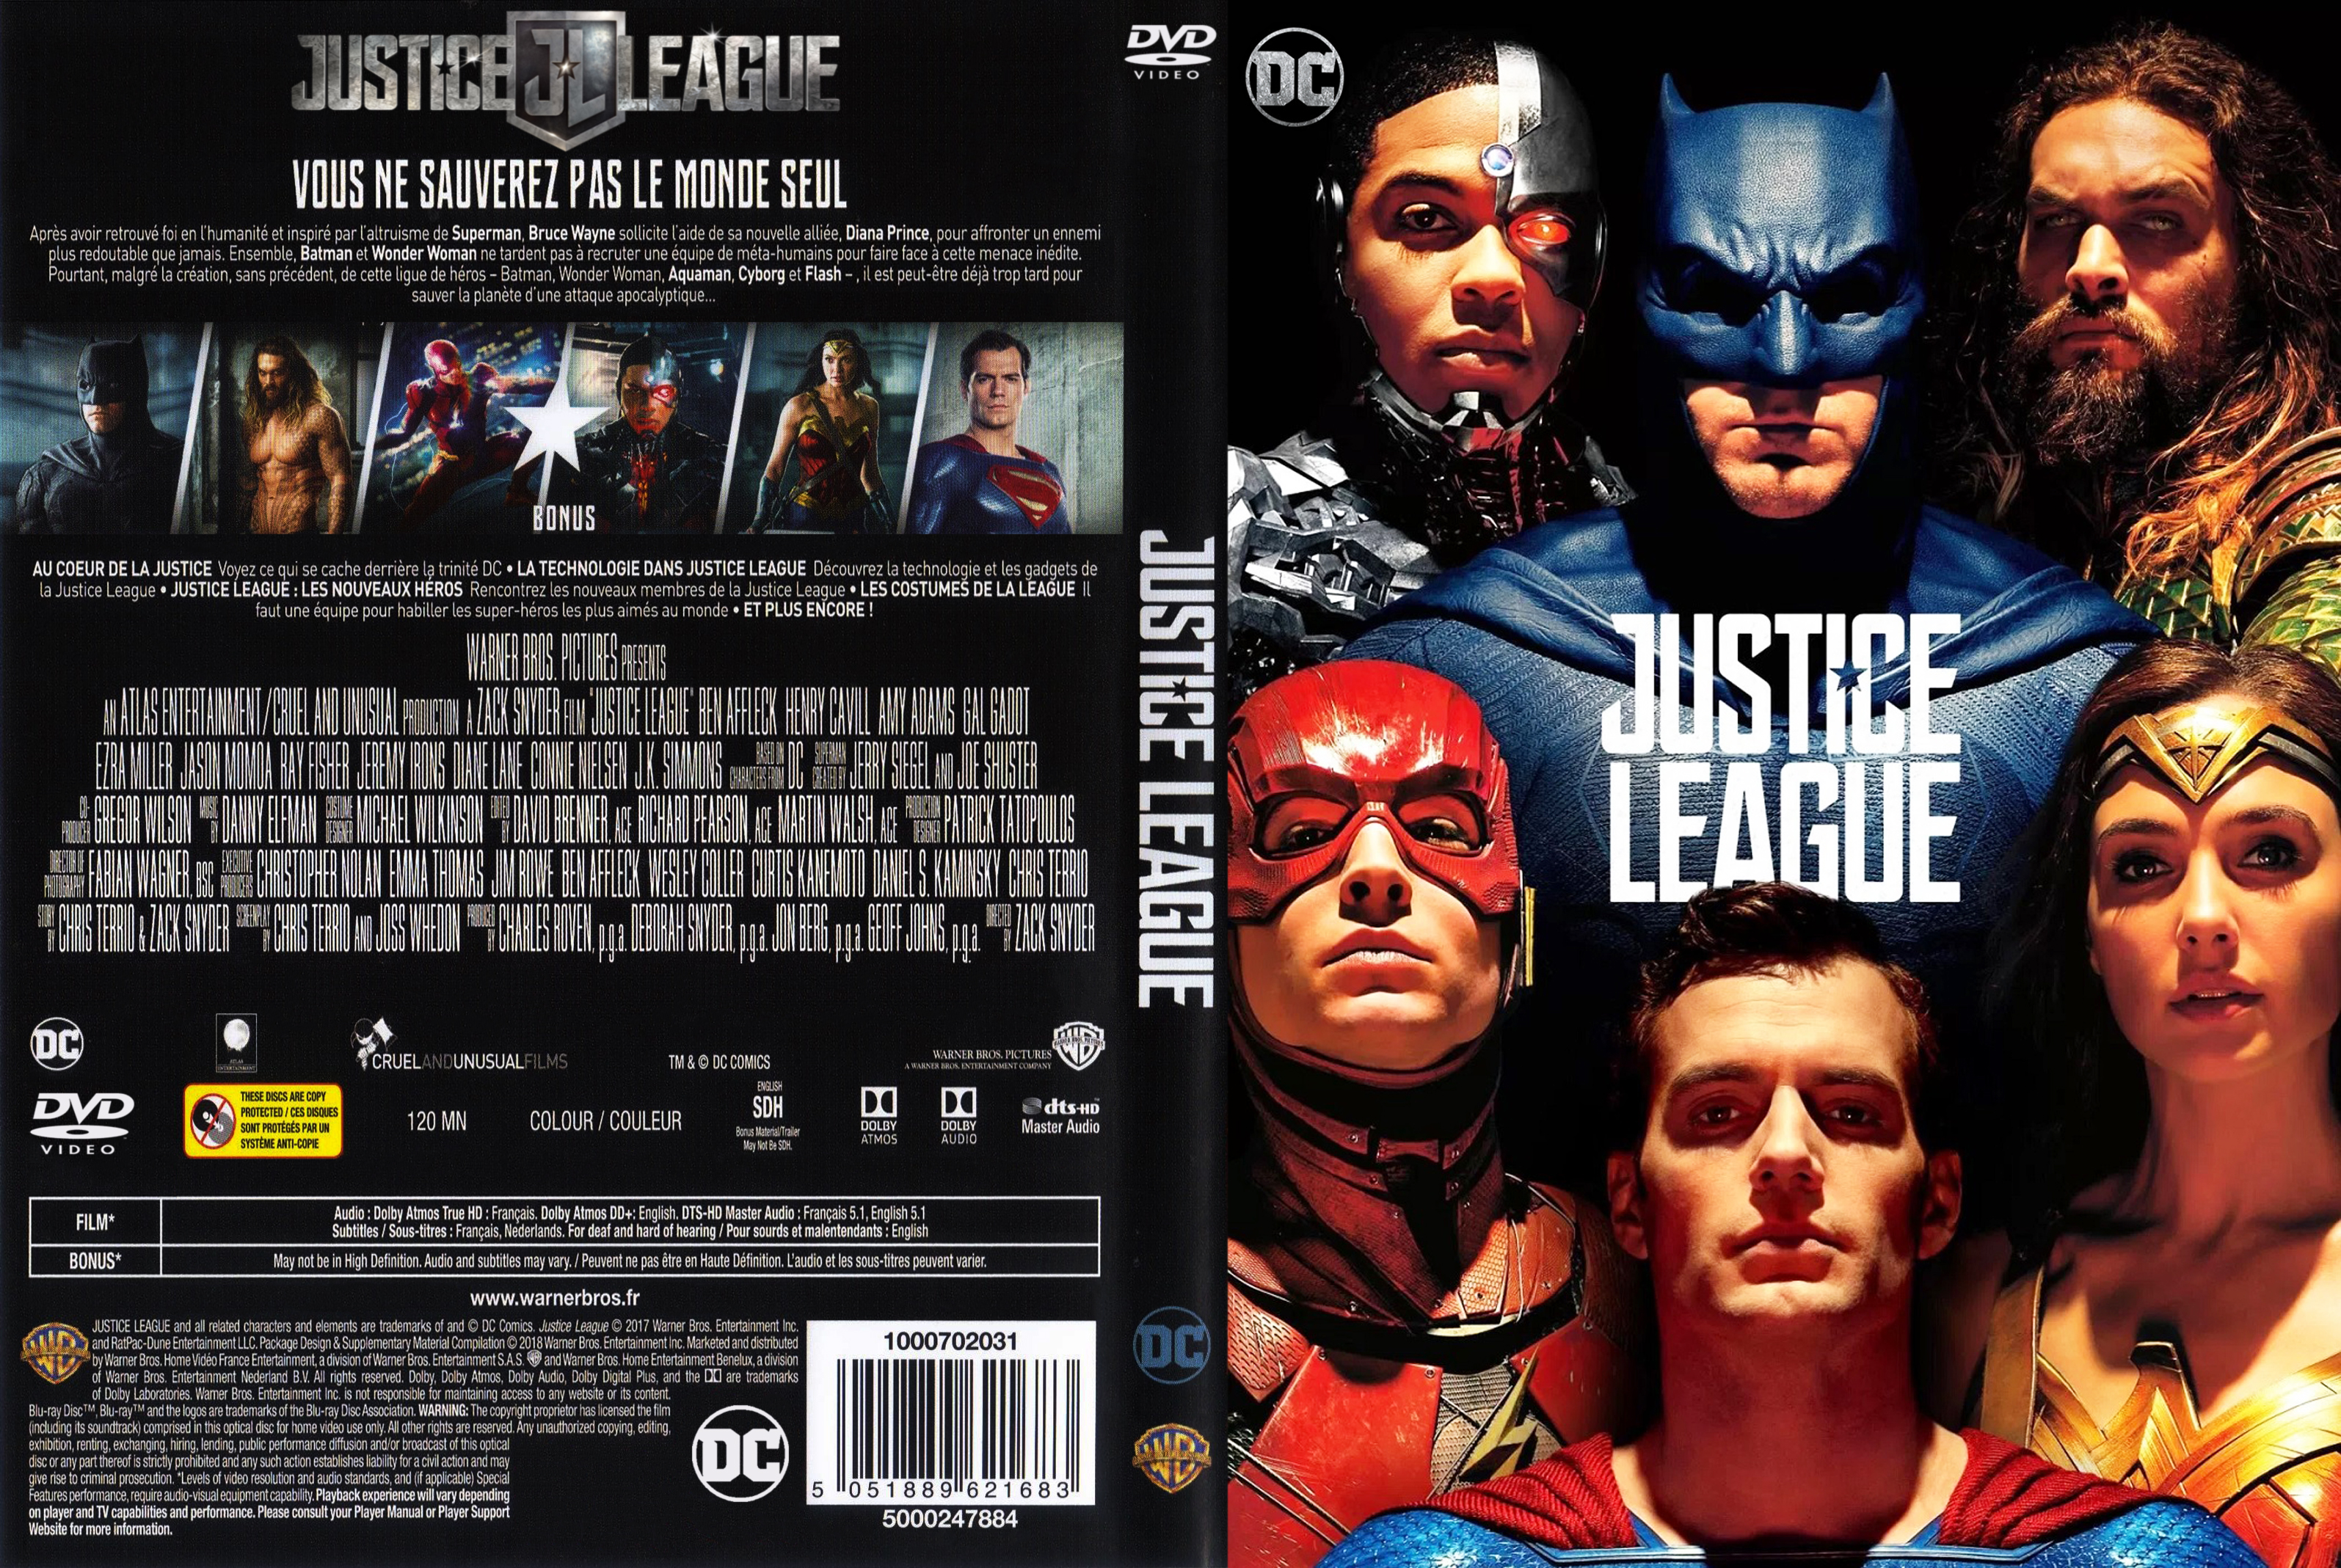 Jaquette DVD Justice League custom v2